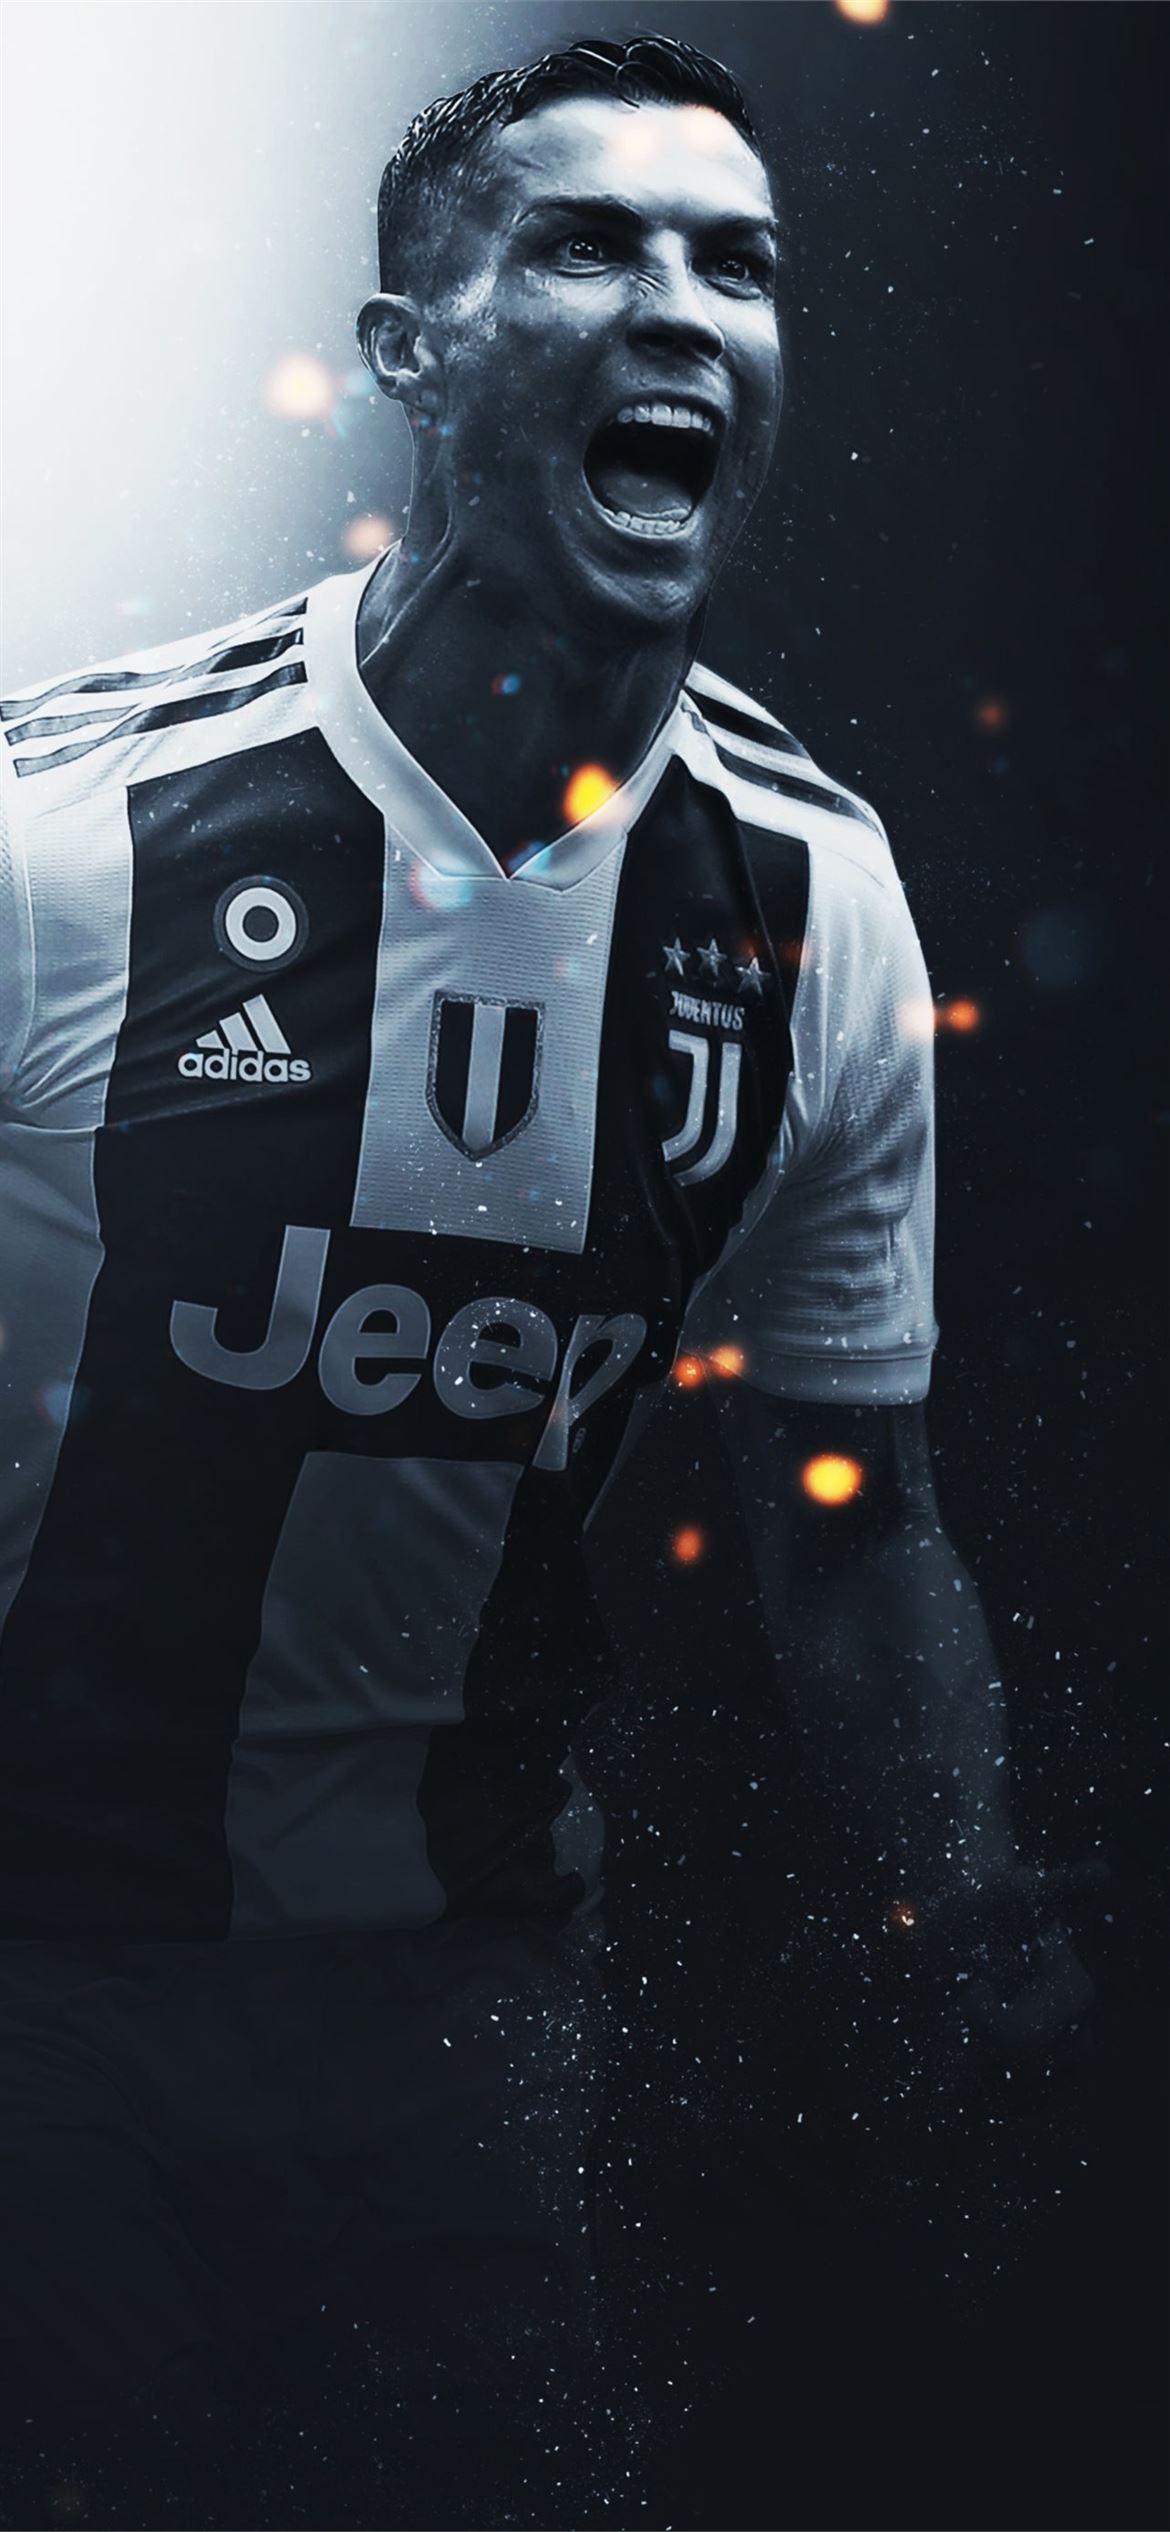 Cristiano Ronaldo Juventus FC Samsung Galaxy Note ... iPhone ...